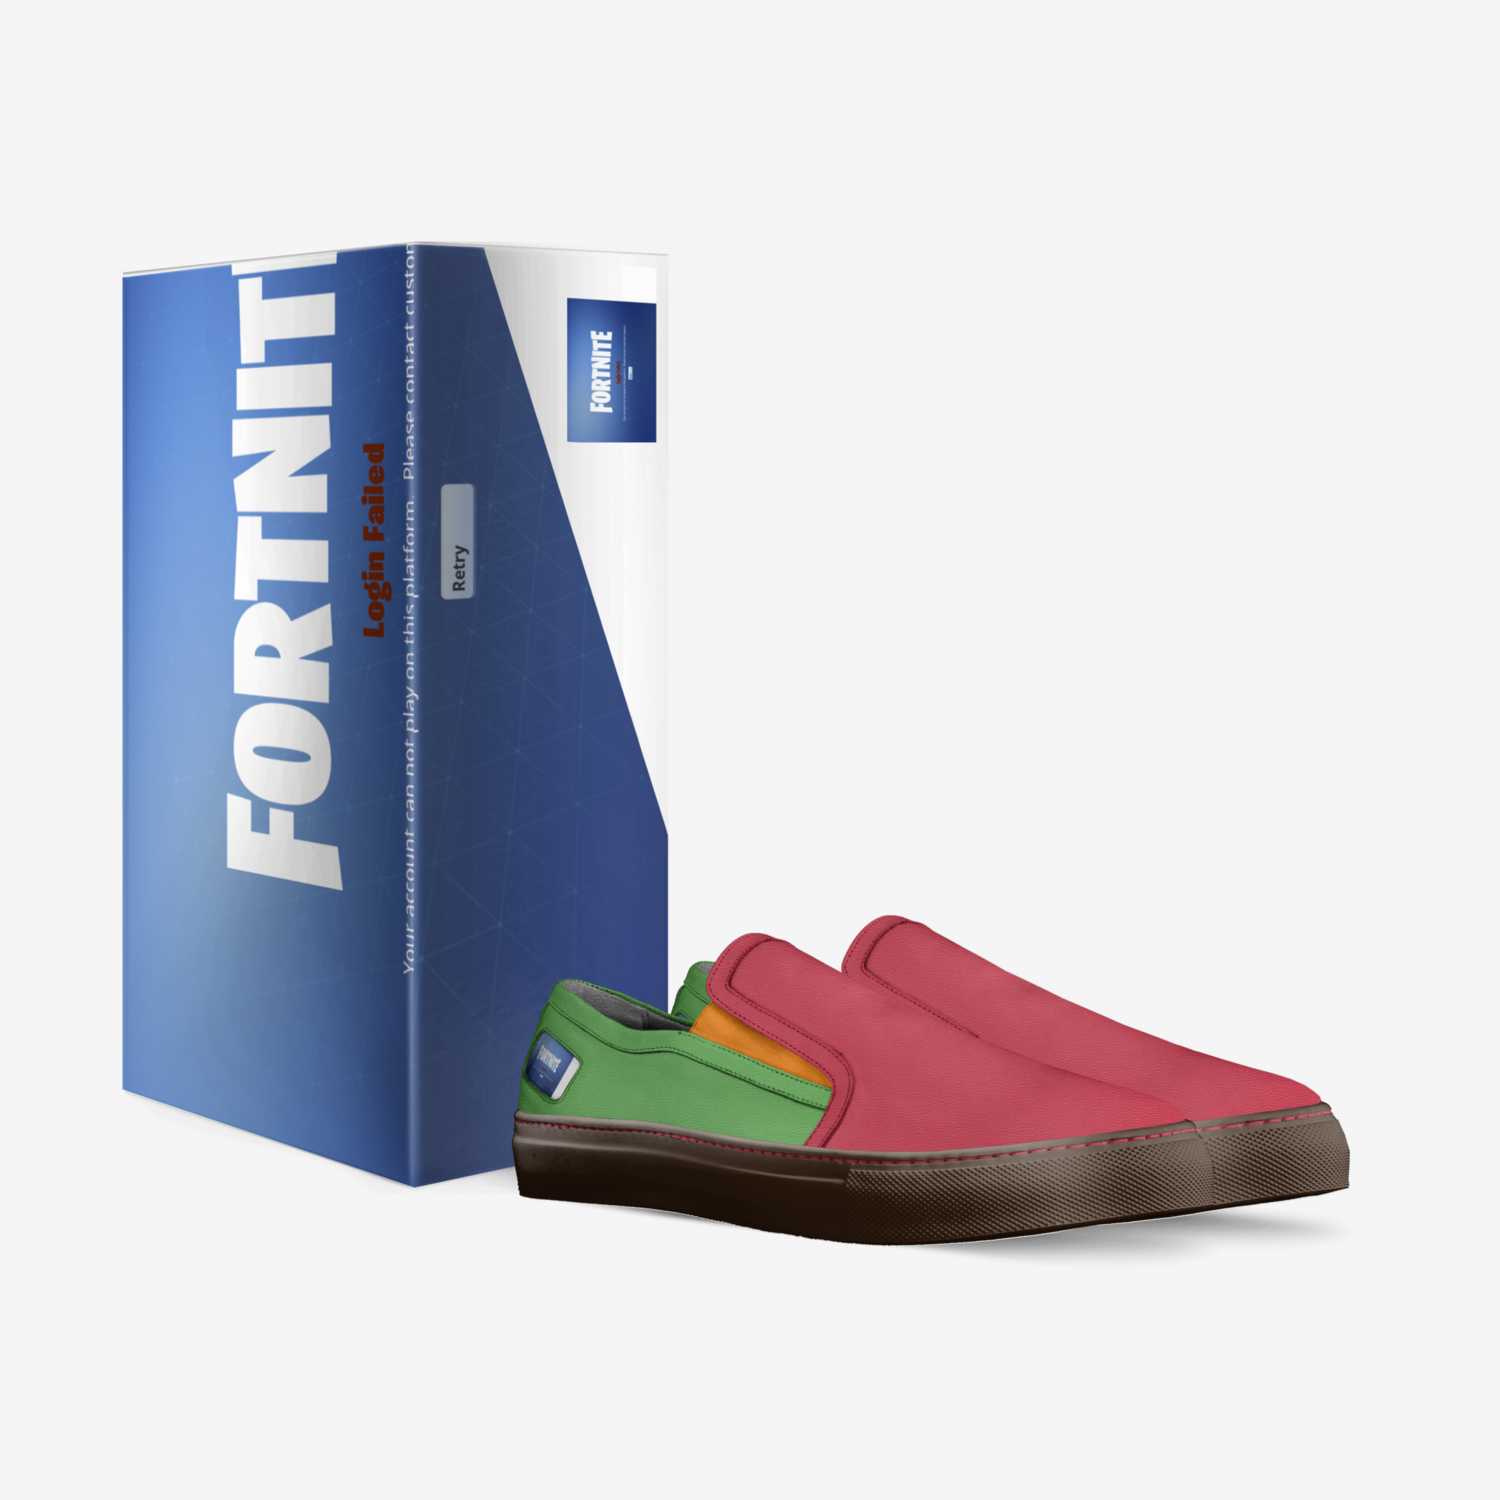 yo boi matty g custom made in Italy shoes by Matty | Box view